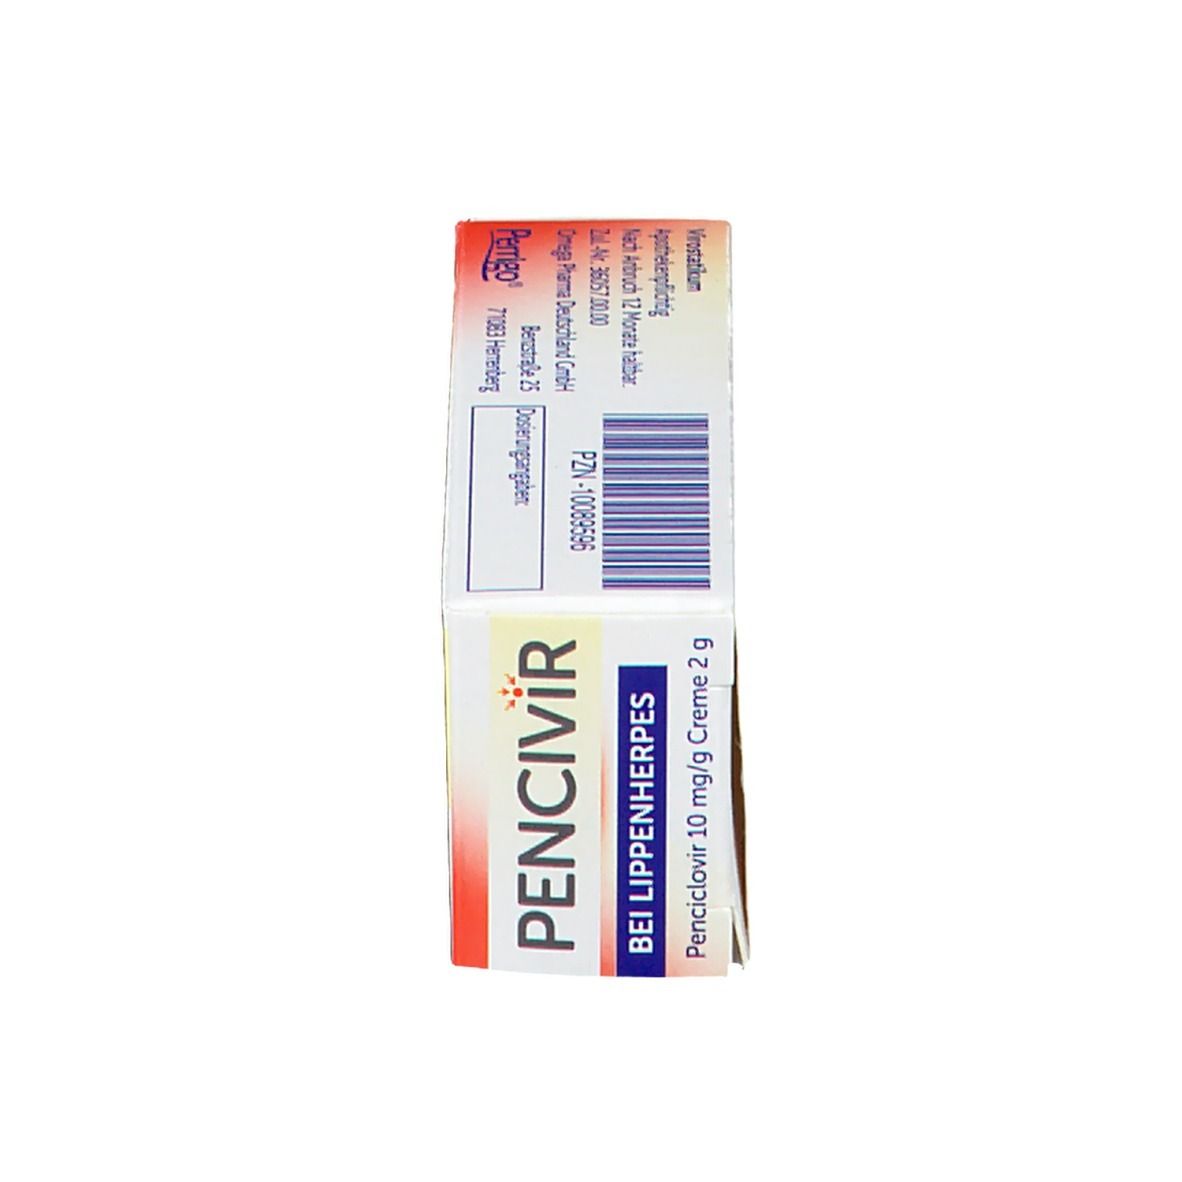 Pencivir bei Lippenherpes Penciclovir 10mg/g Creme